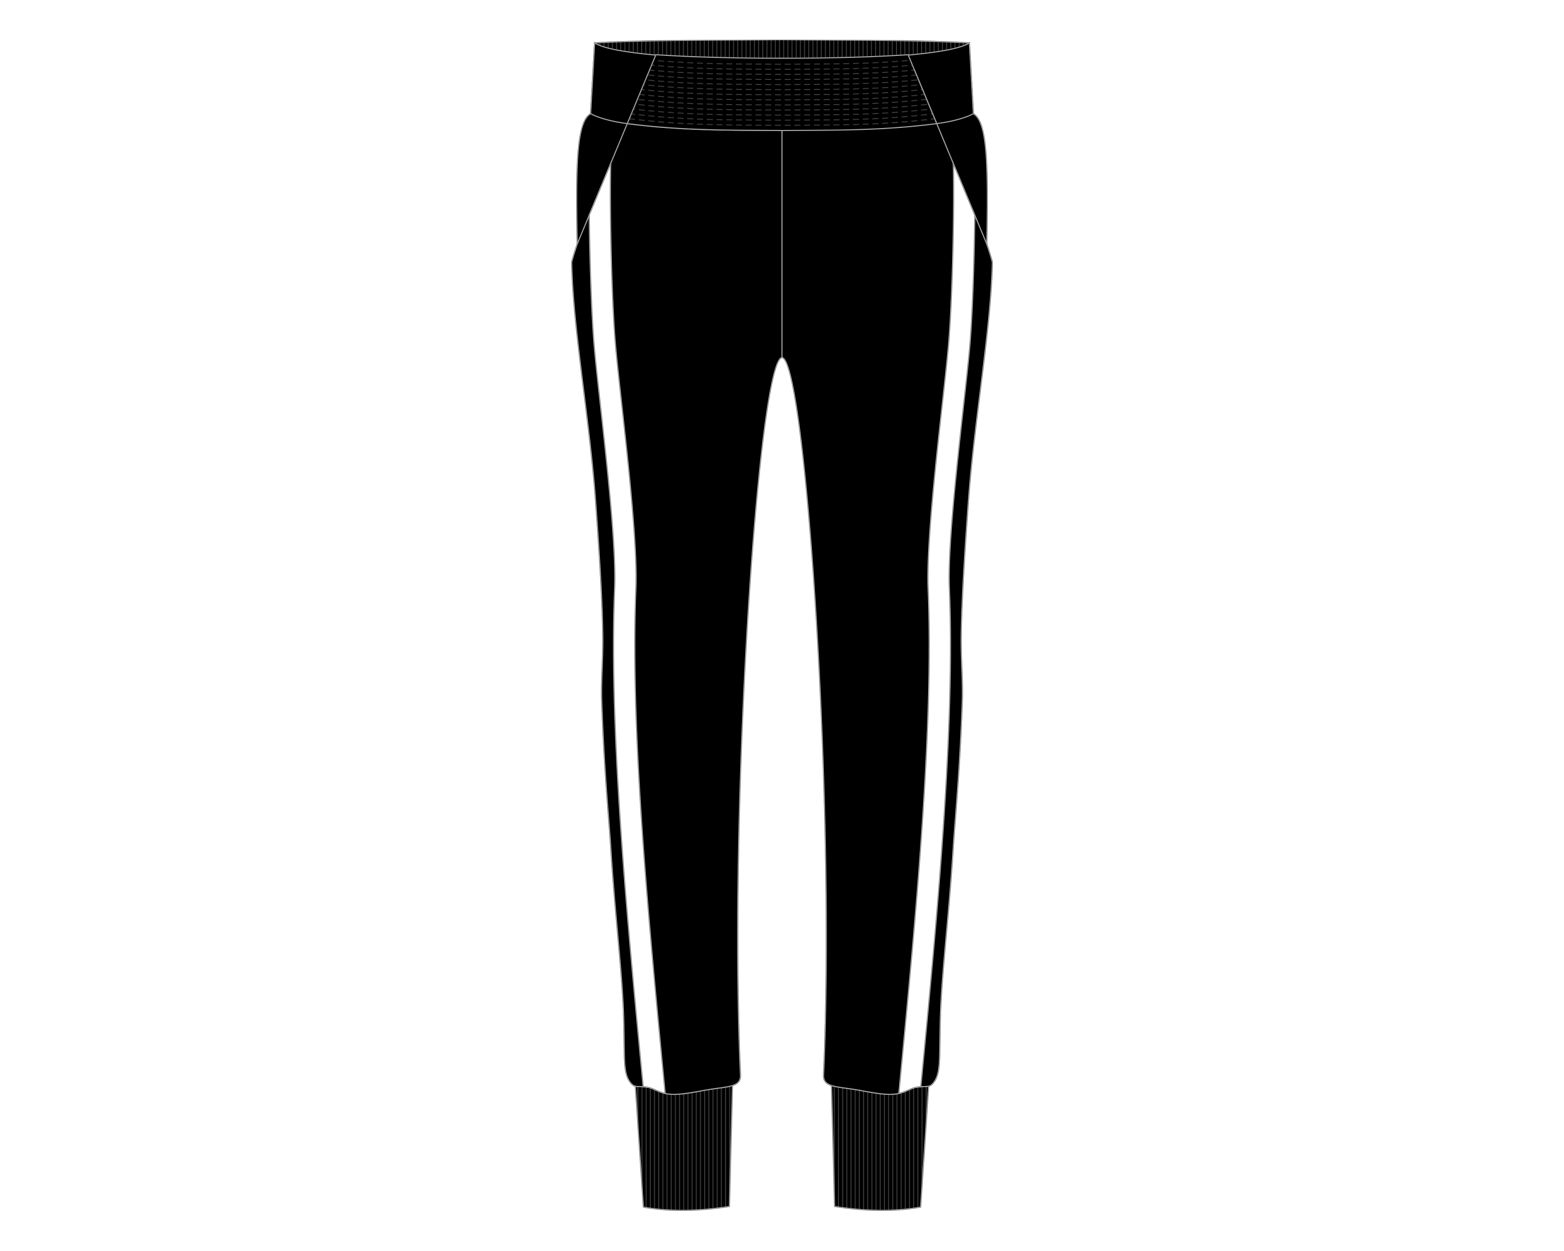 Order Group Casual Pants Customized Running Pants Bib Pants Store